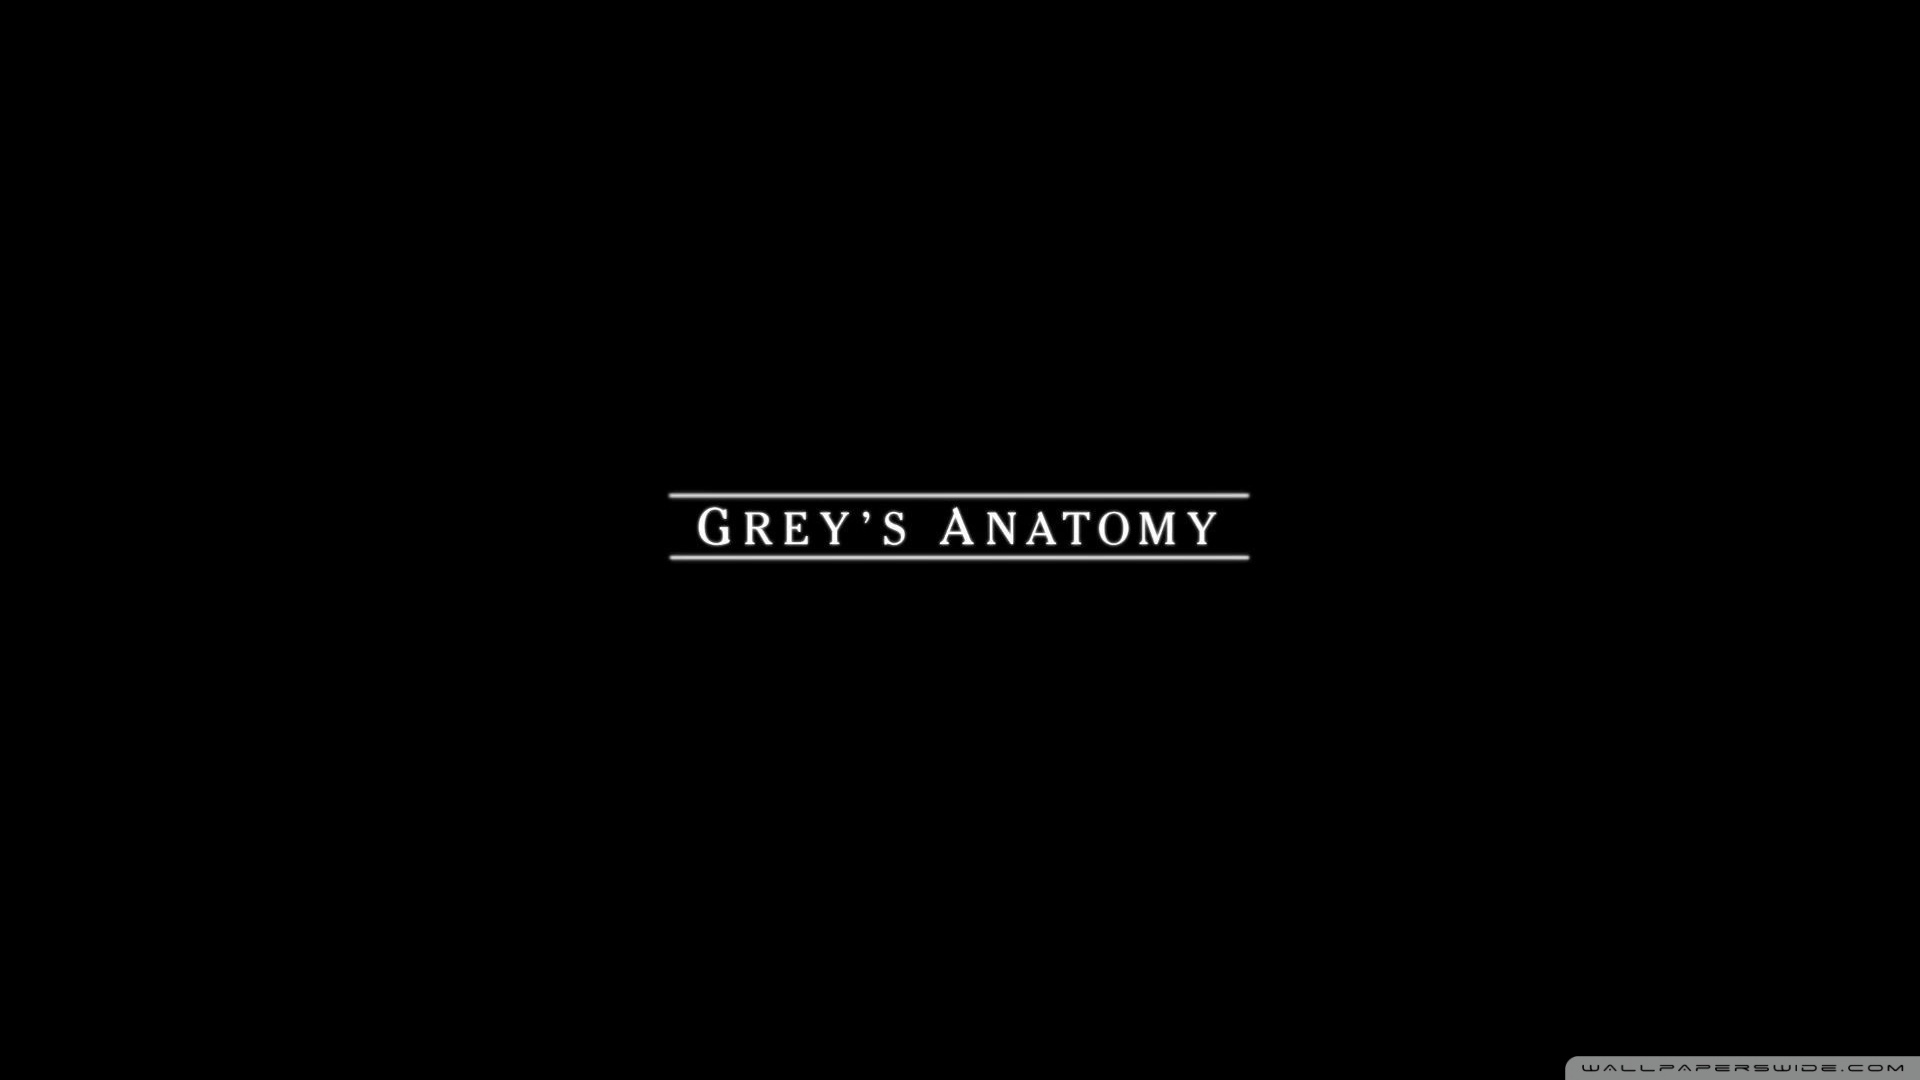 Greys Anatomy Wallpaper 1920x1080 Greys Anatomy